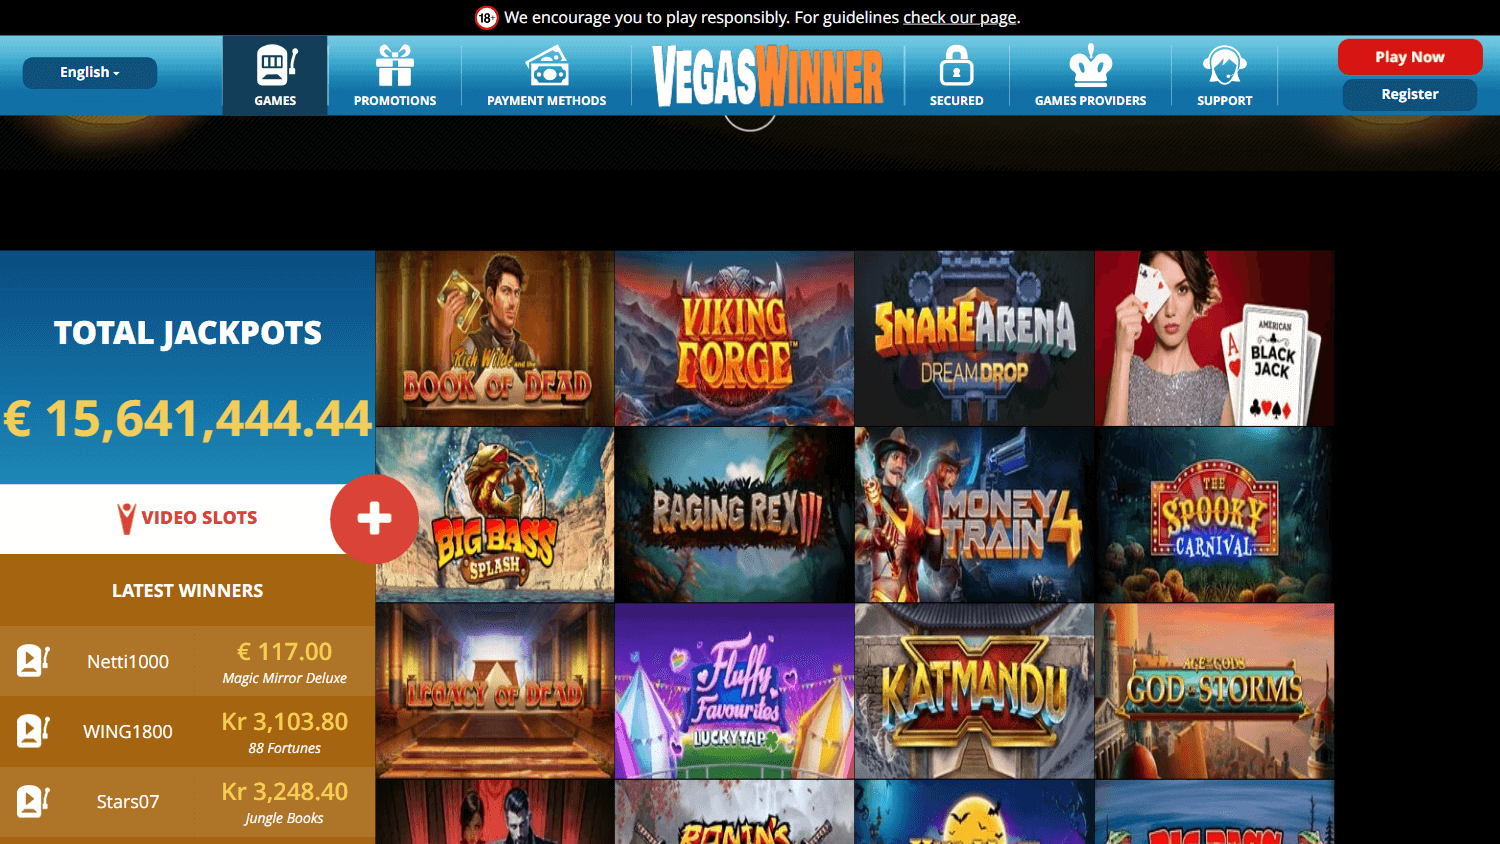 vegaswinner_casino_game_gallery_desktop